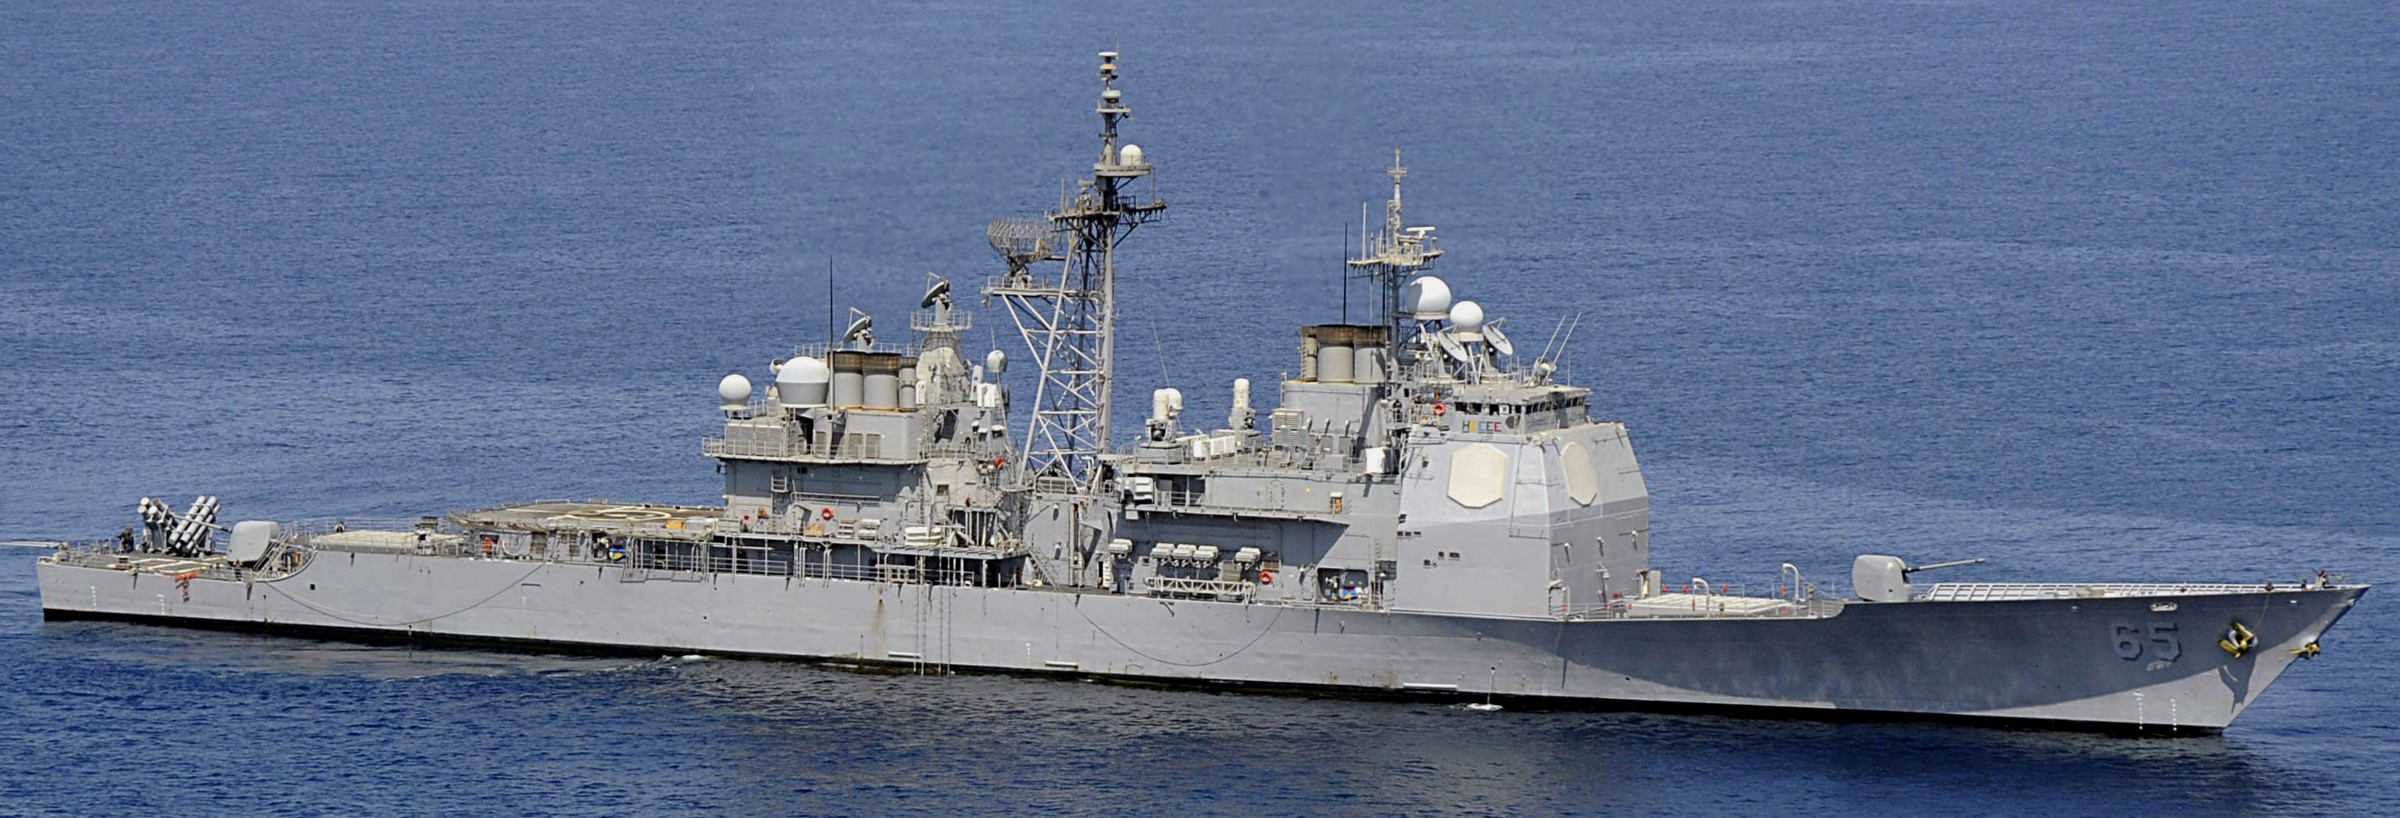 cg-65 uss chosin ticonderoga class guided missile cruiser aegis us navy 20